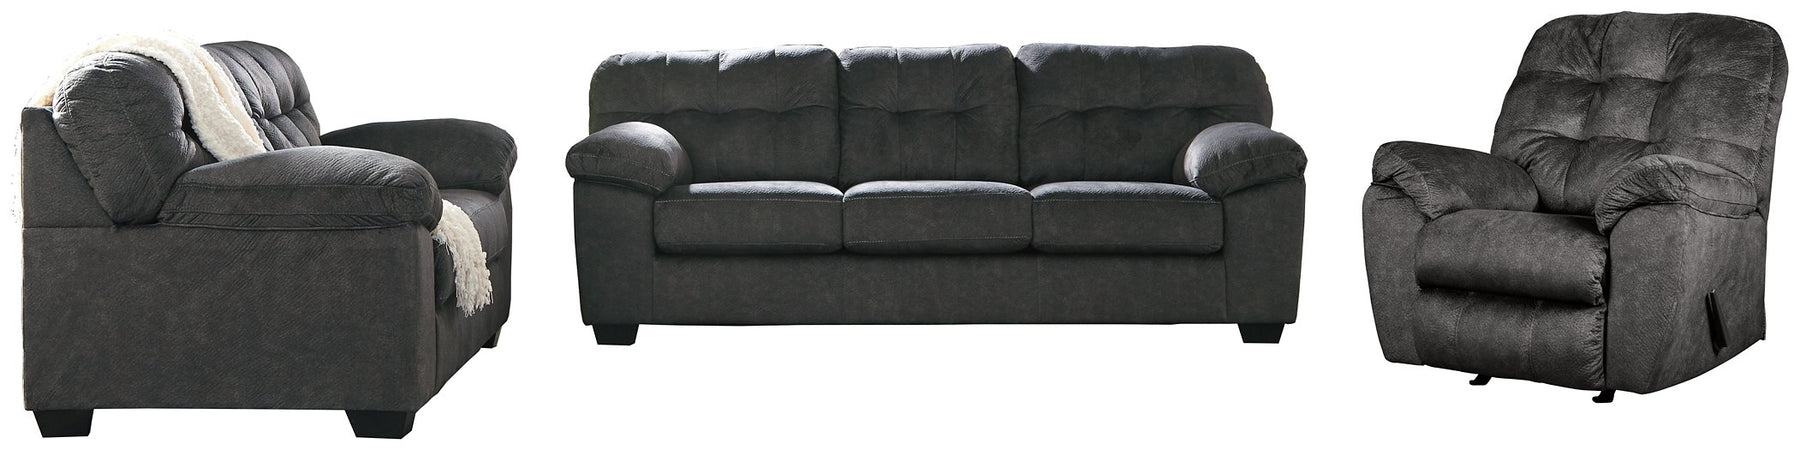 Accrington Living Room Set - Half Price Furniture